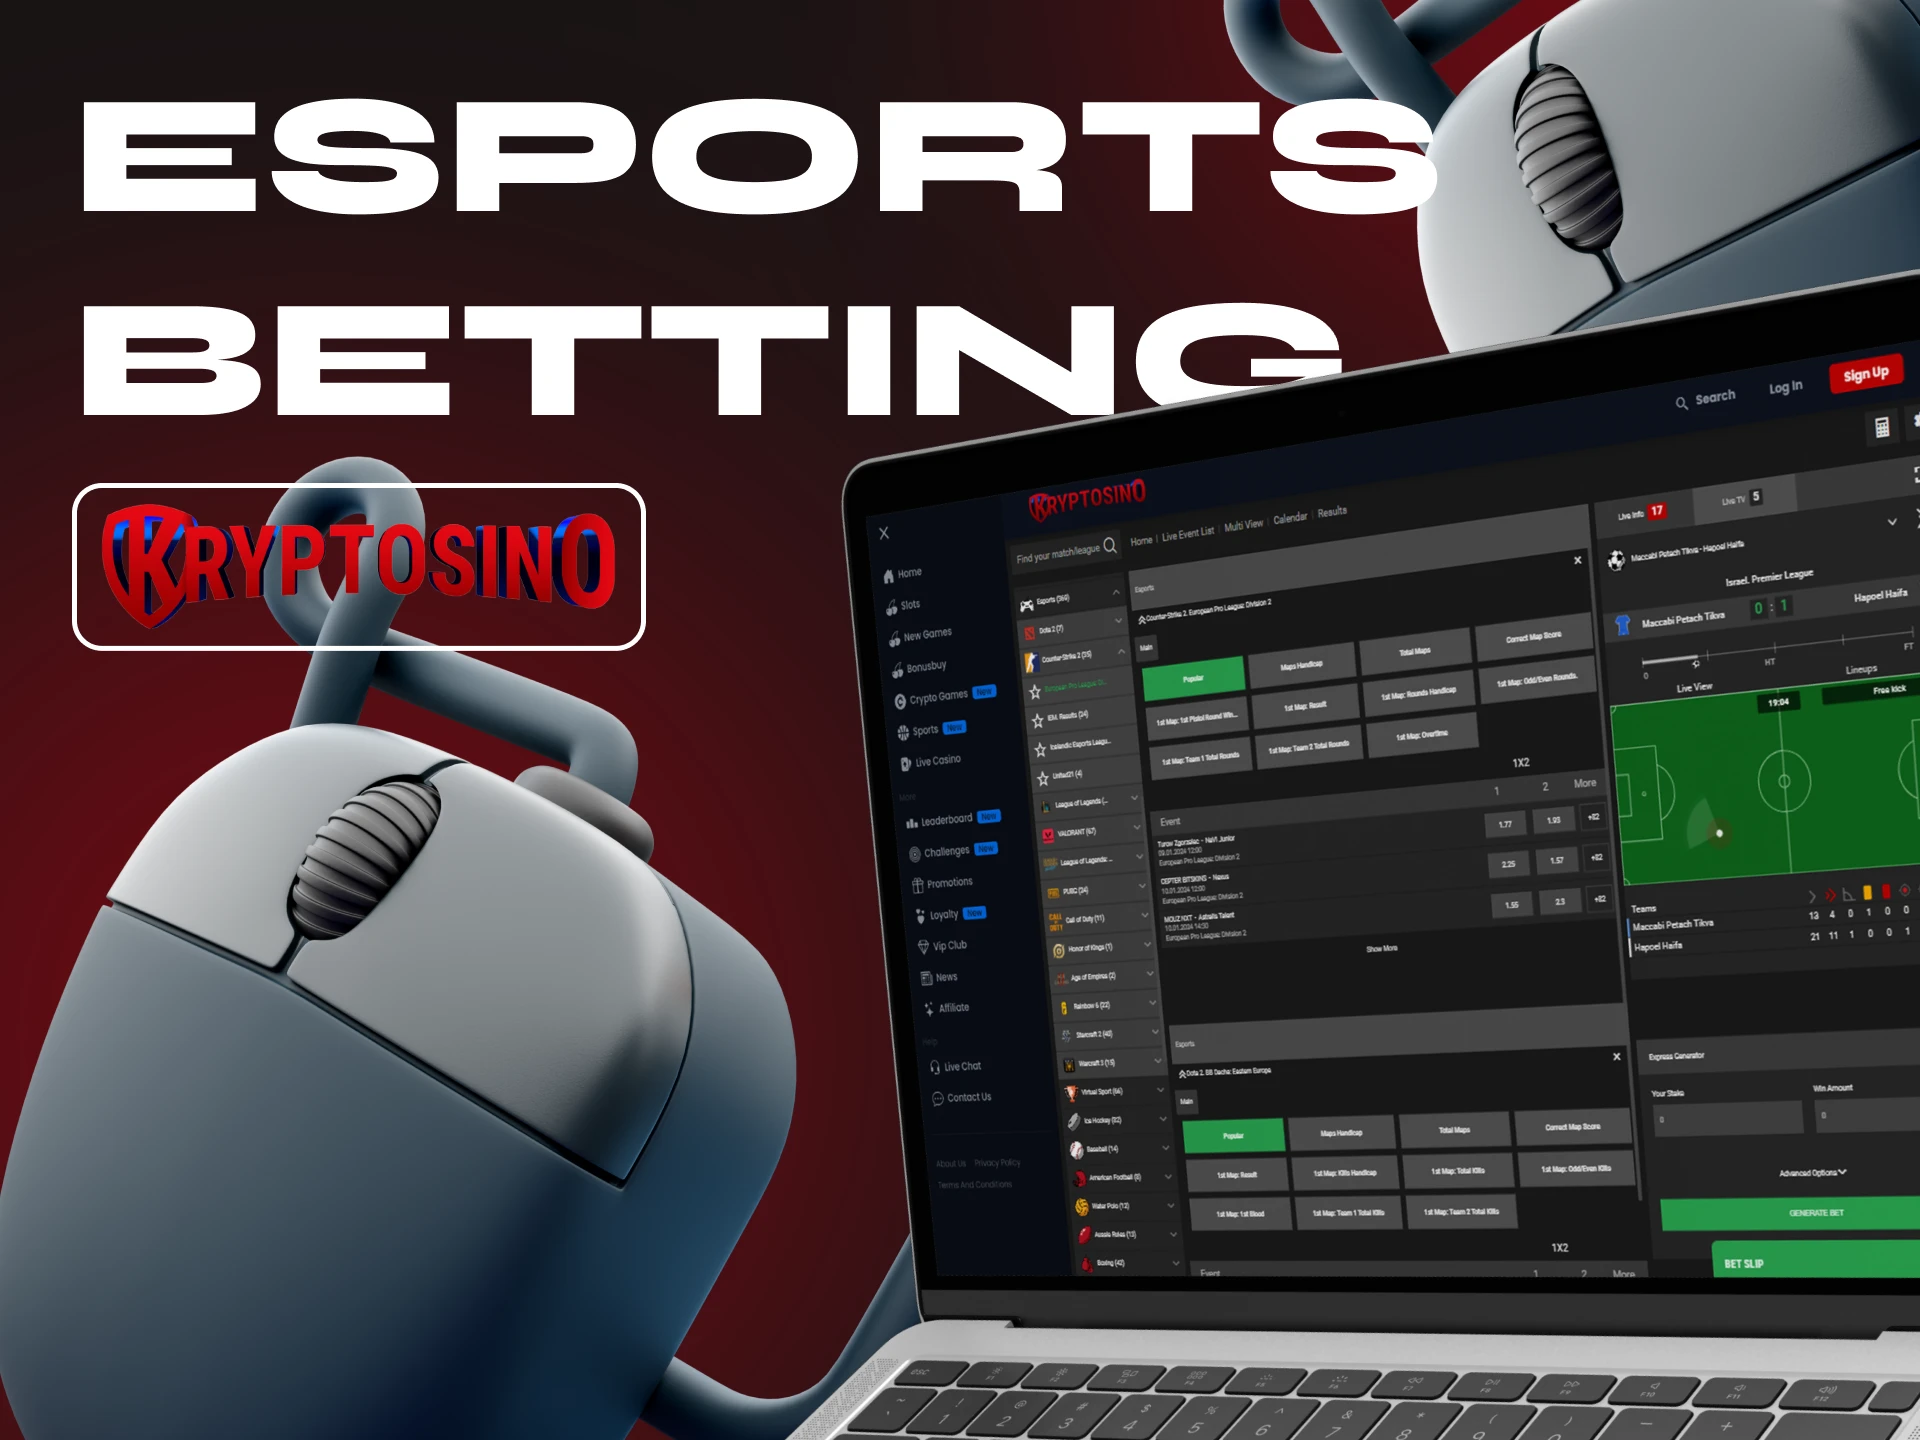 If you love computer games, try eSports betting at Kryptosino Casino.